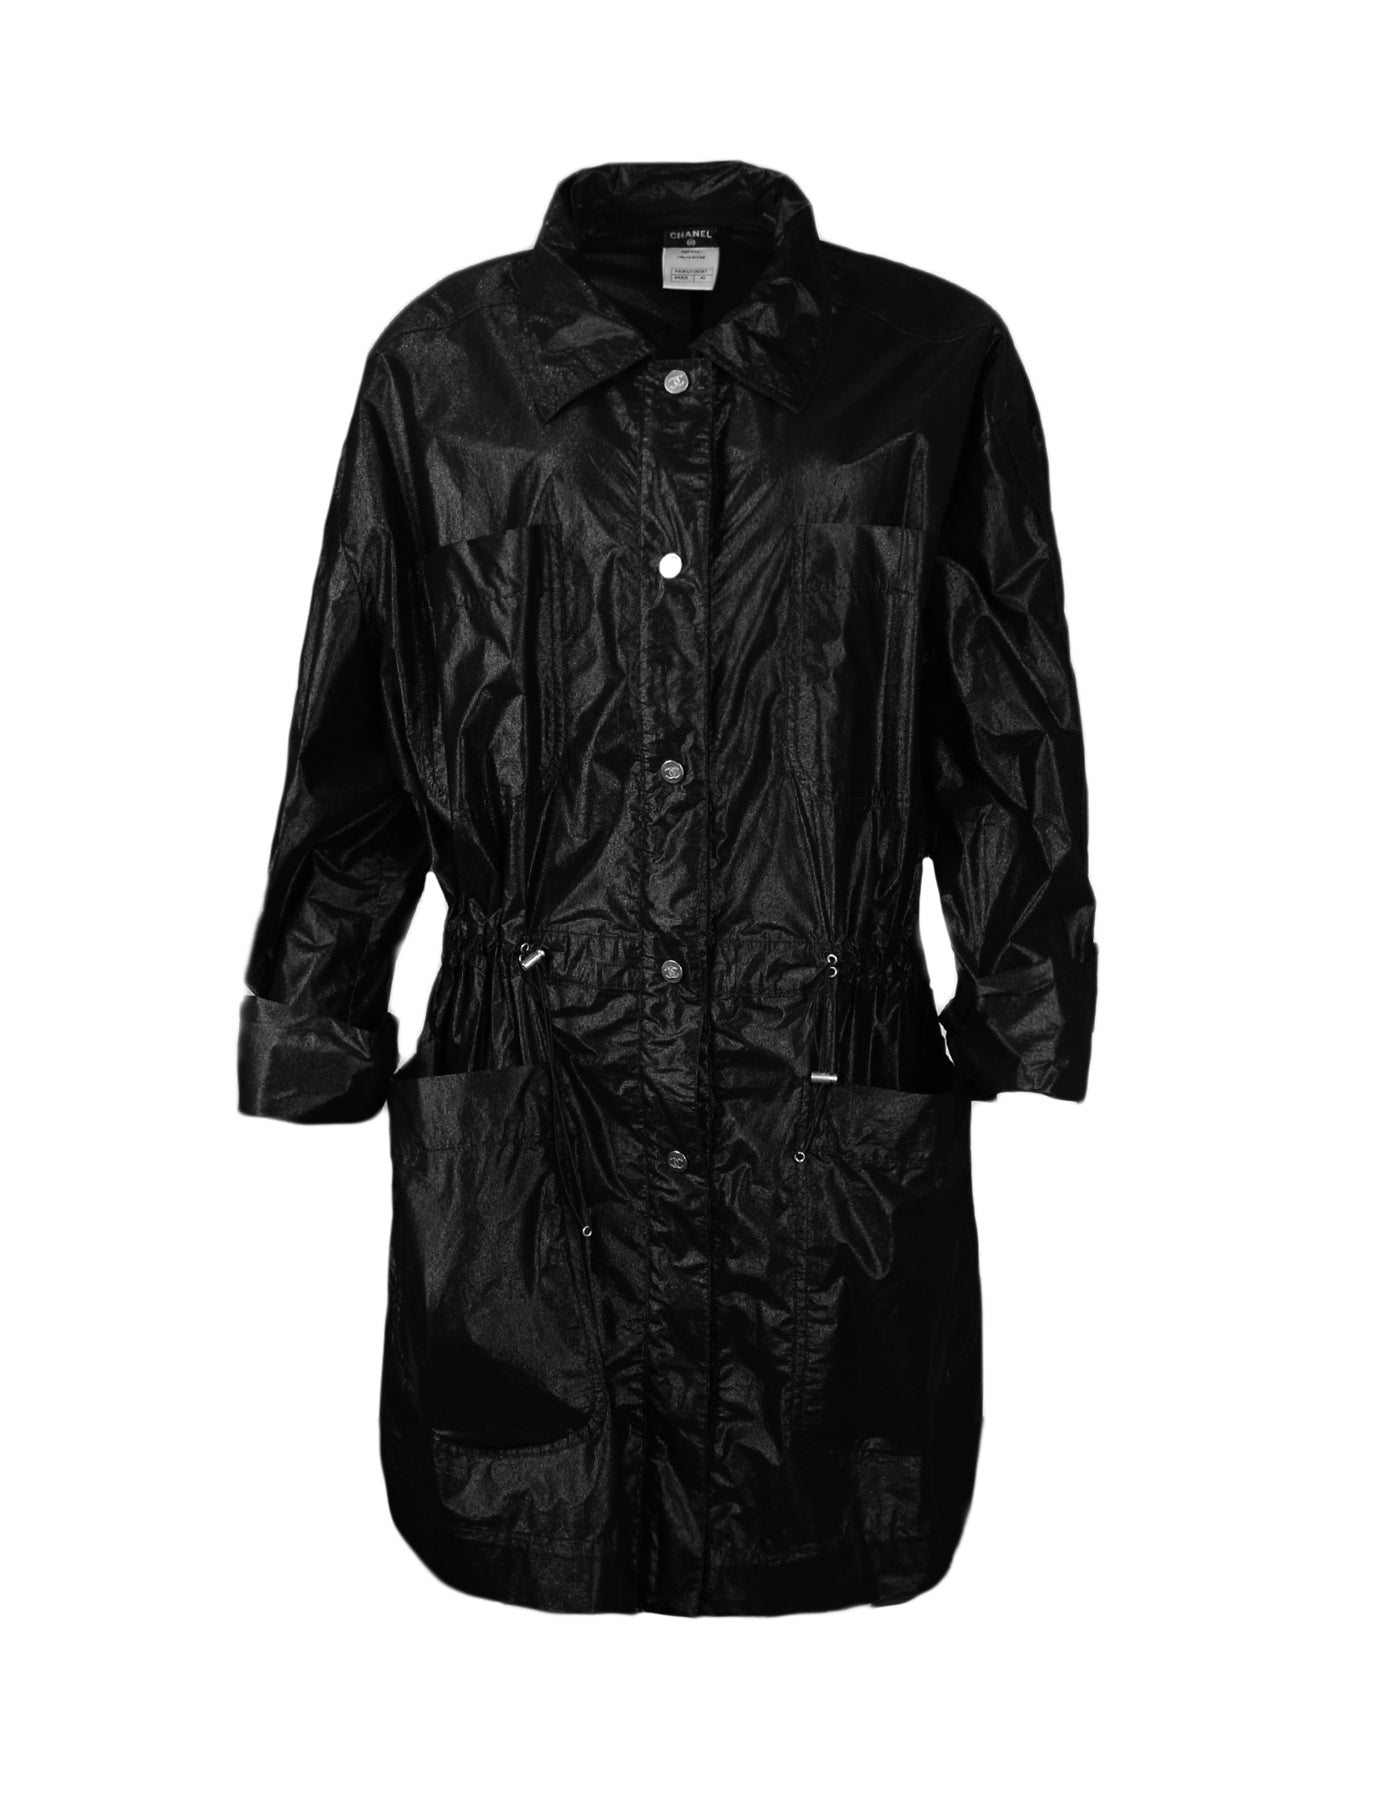 Chanel Black Shiny Snap Jacket with Elastic Cinched Waist sz FR40